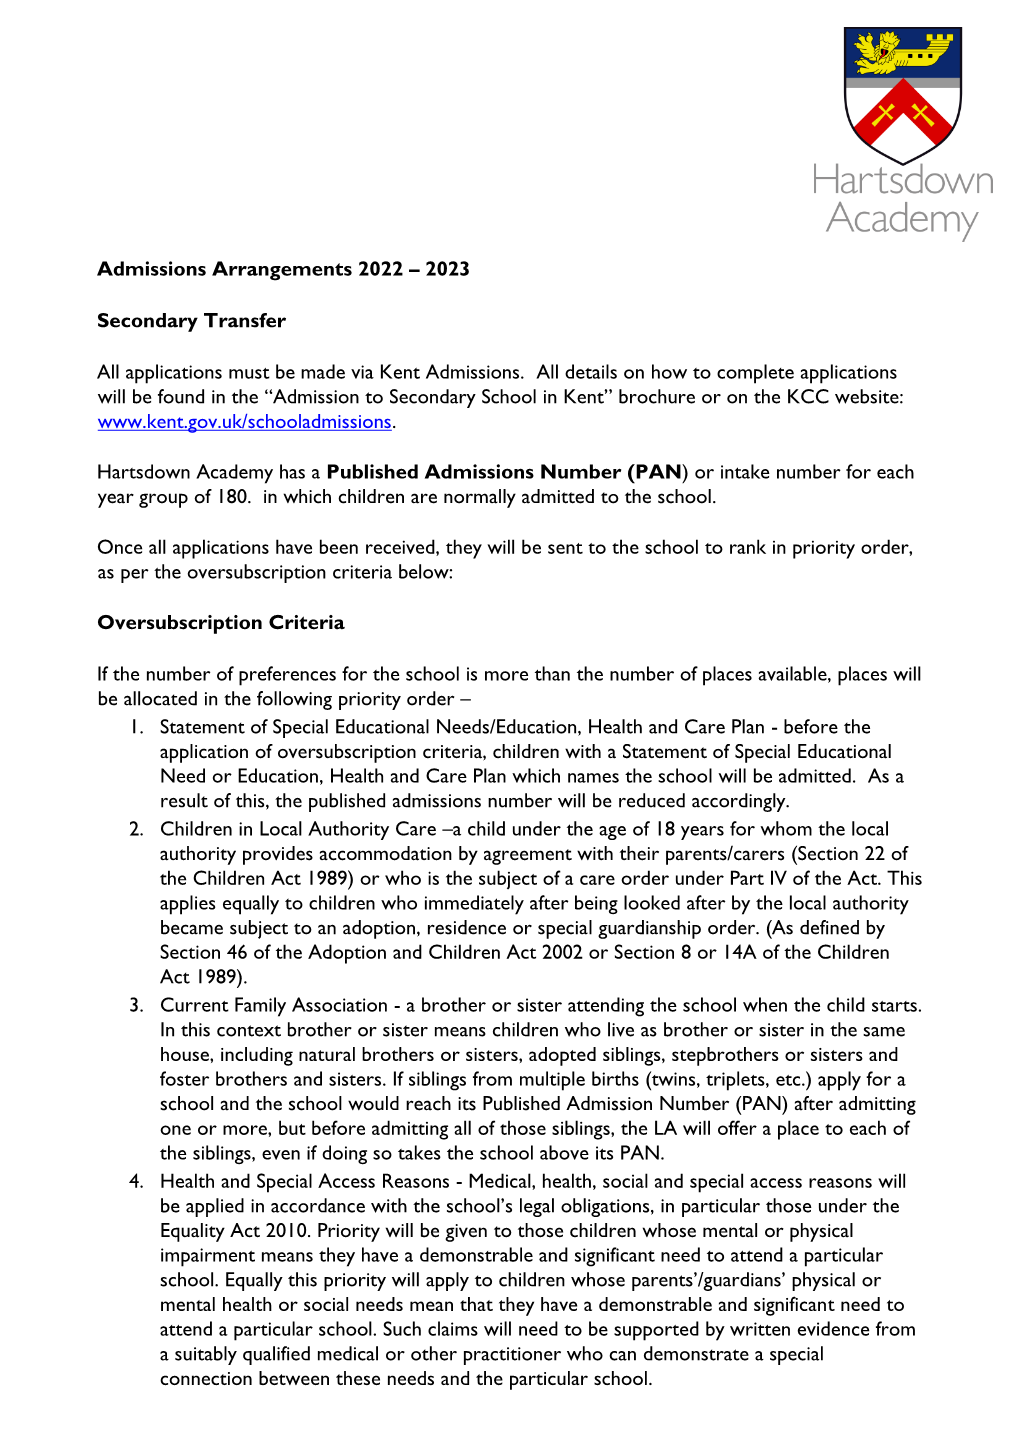 Hartsdown Academy Admissions Criteria 2022-2023